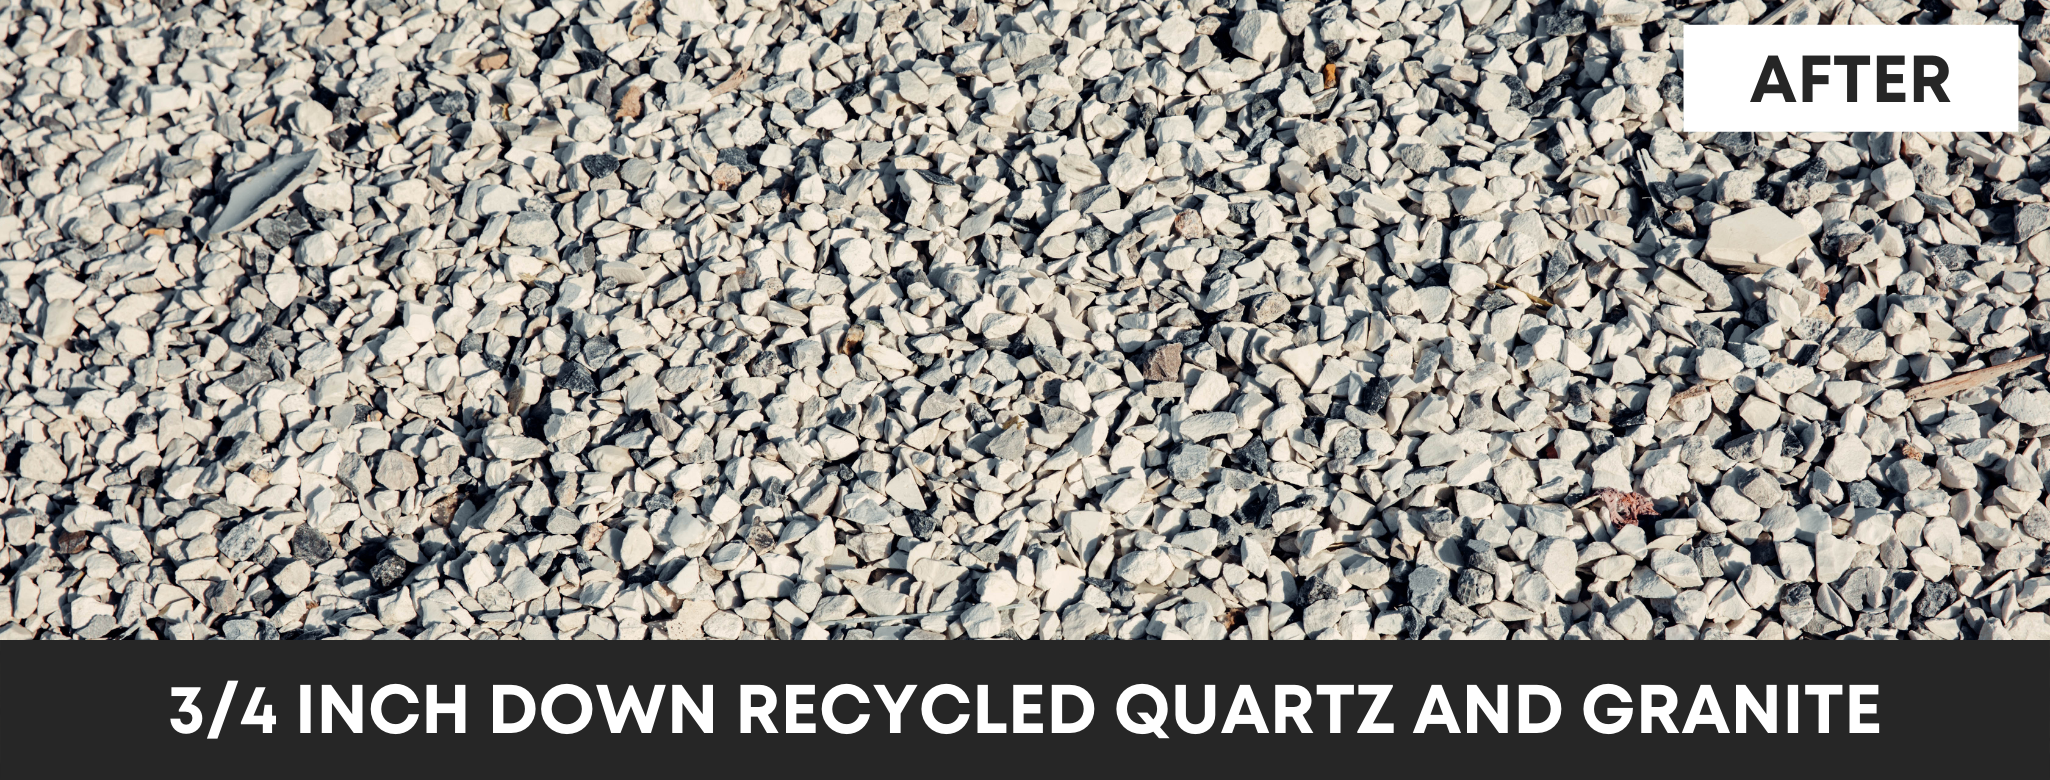 Recycled Quartz and Granite